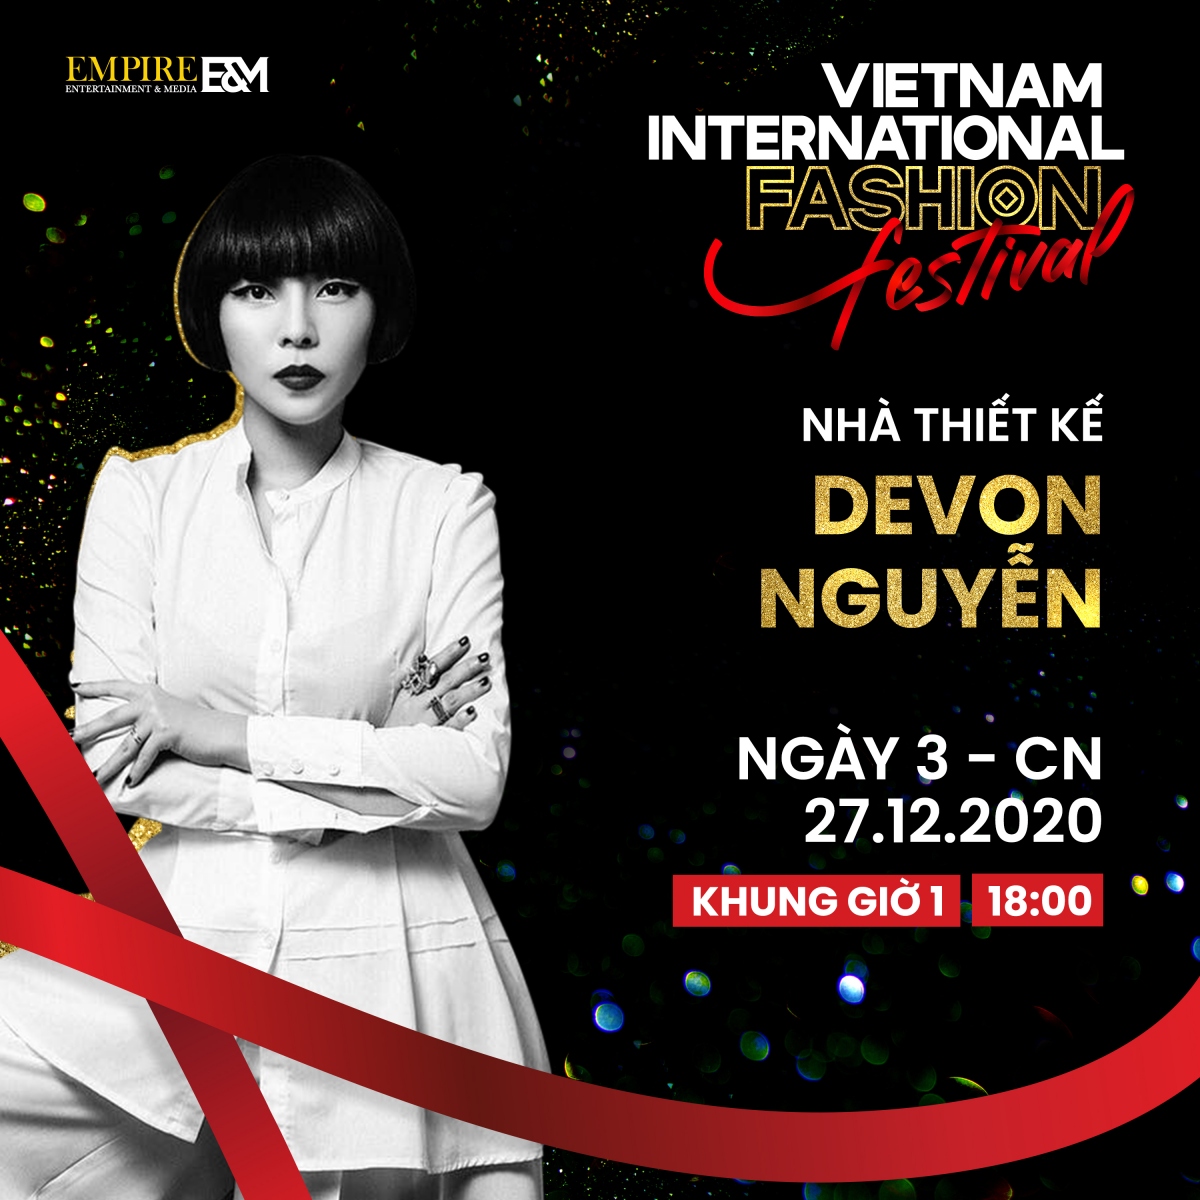 thu phuong, ha tran, suboi tham gia trinh dien tai vietnam international fashion festival hinh anh 4